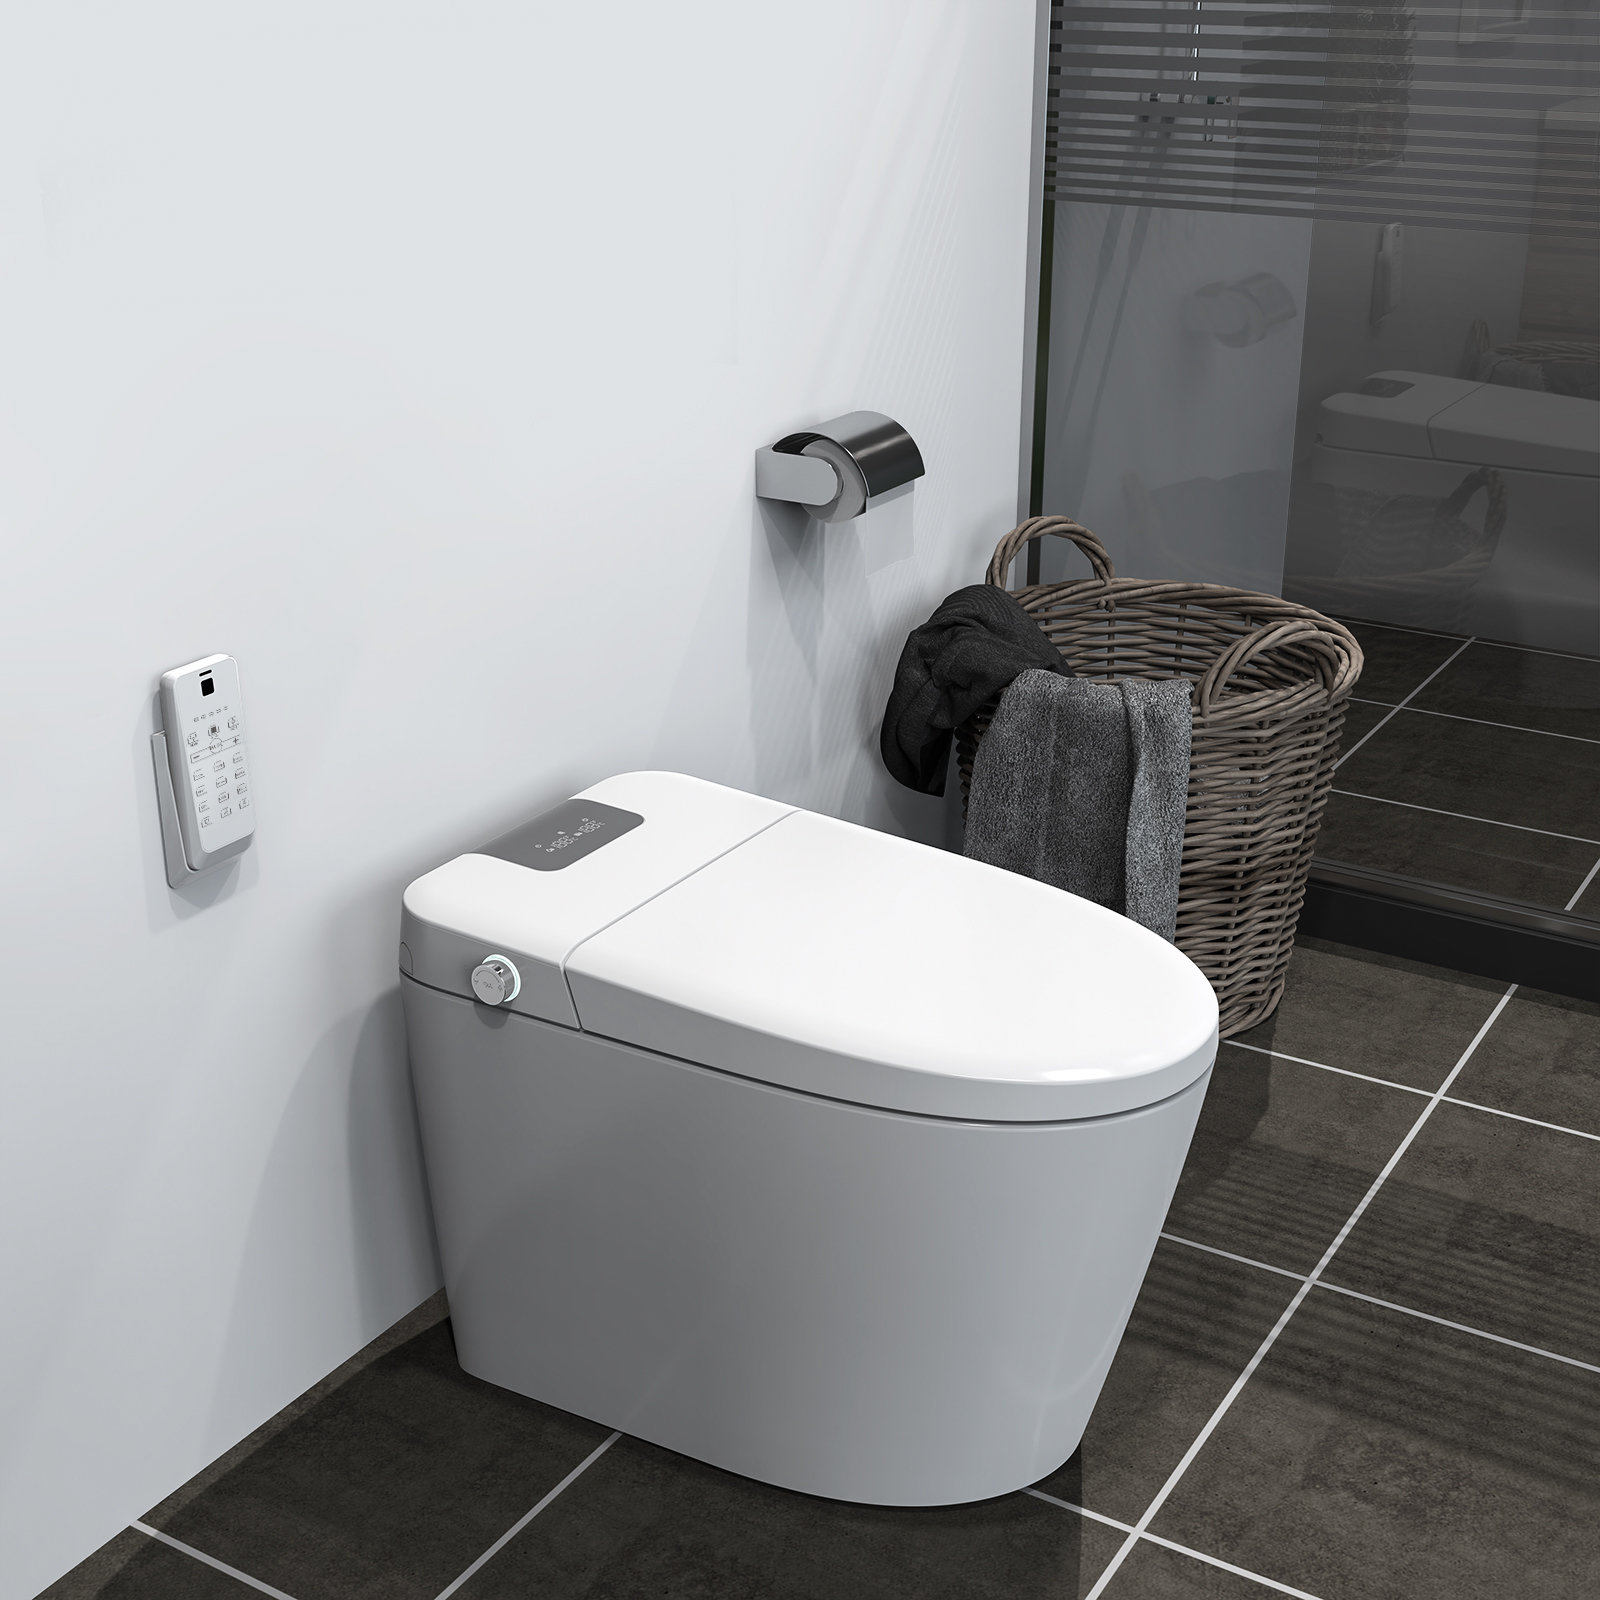 HOROW Smart Toilet W/Auto-Flush Heated Seat Dryer Night Light Remote Control